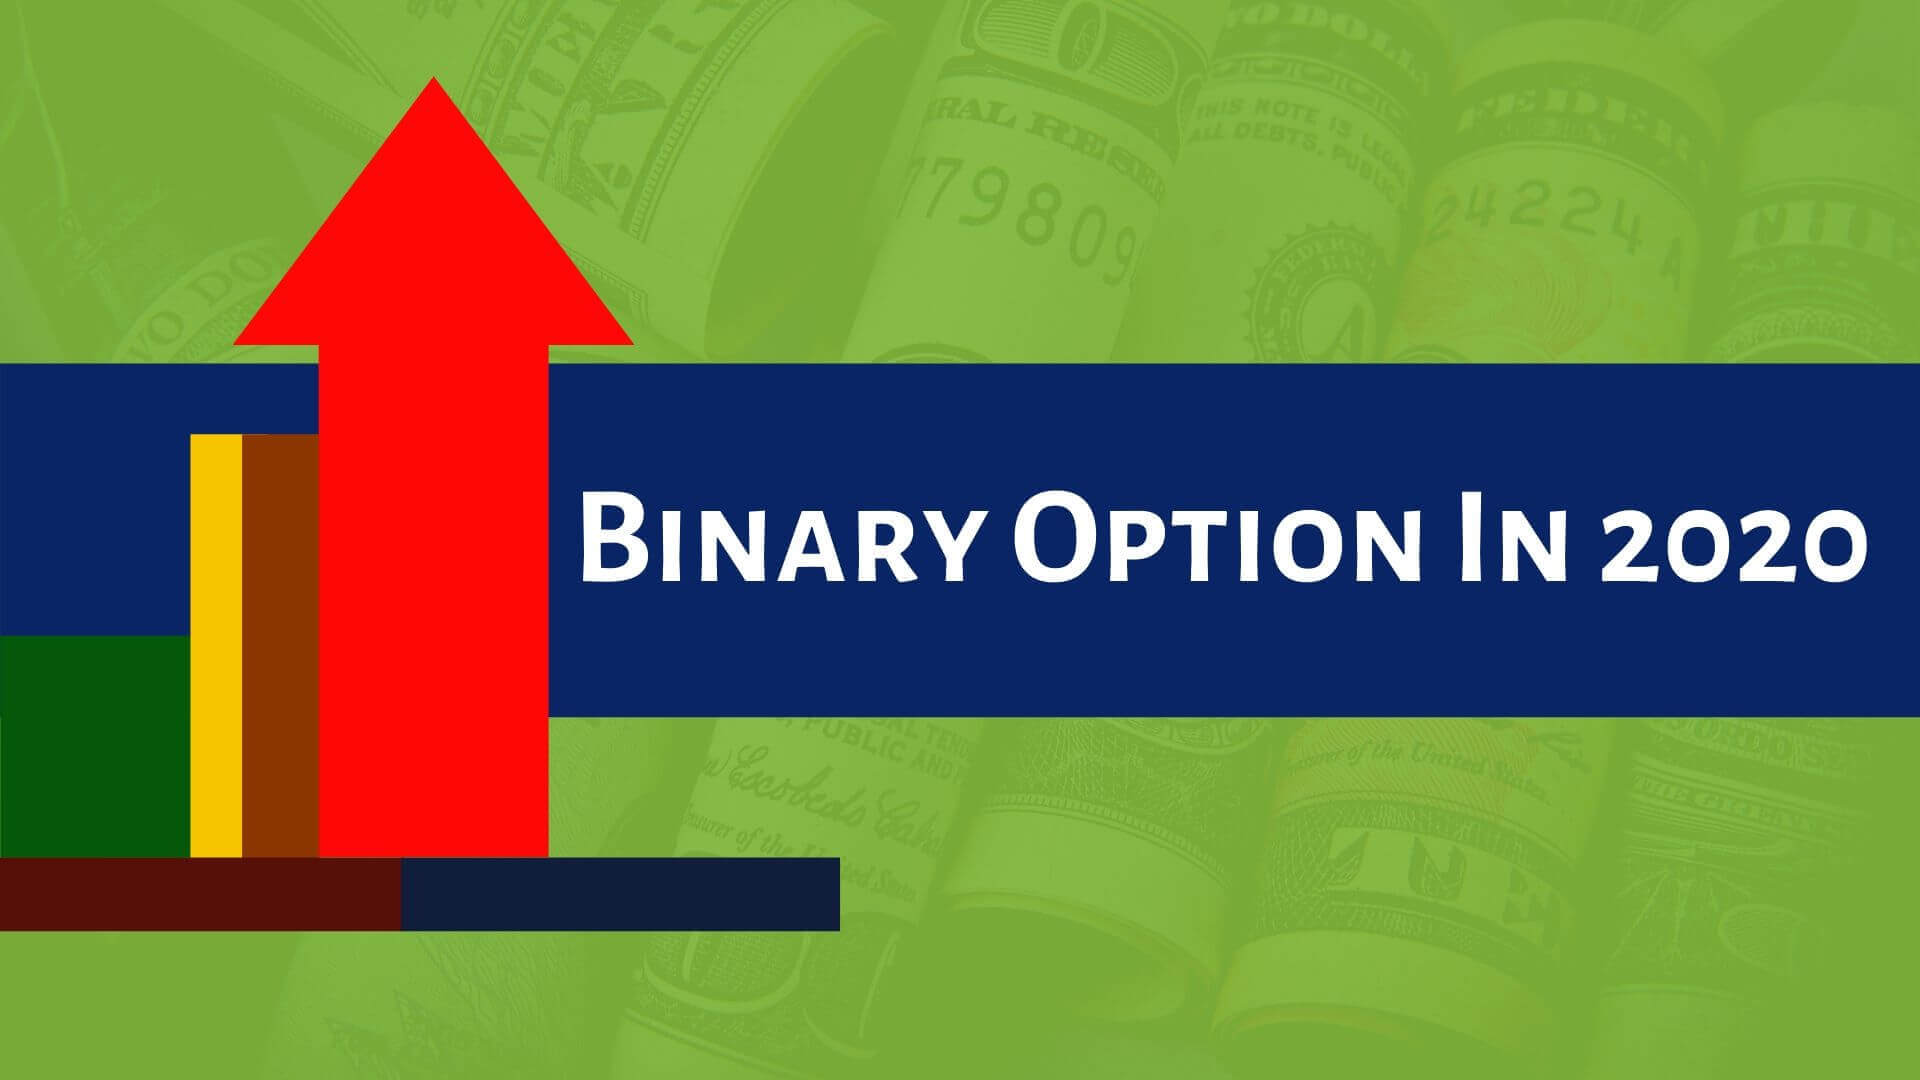 Binary options industry 2020